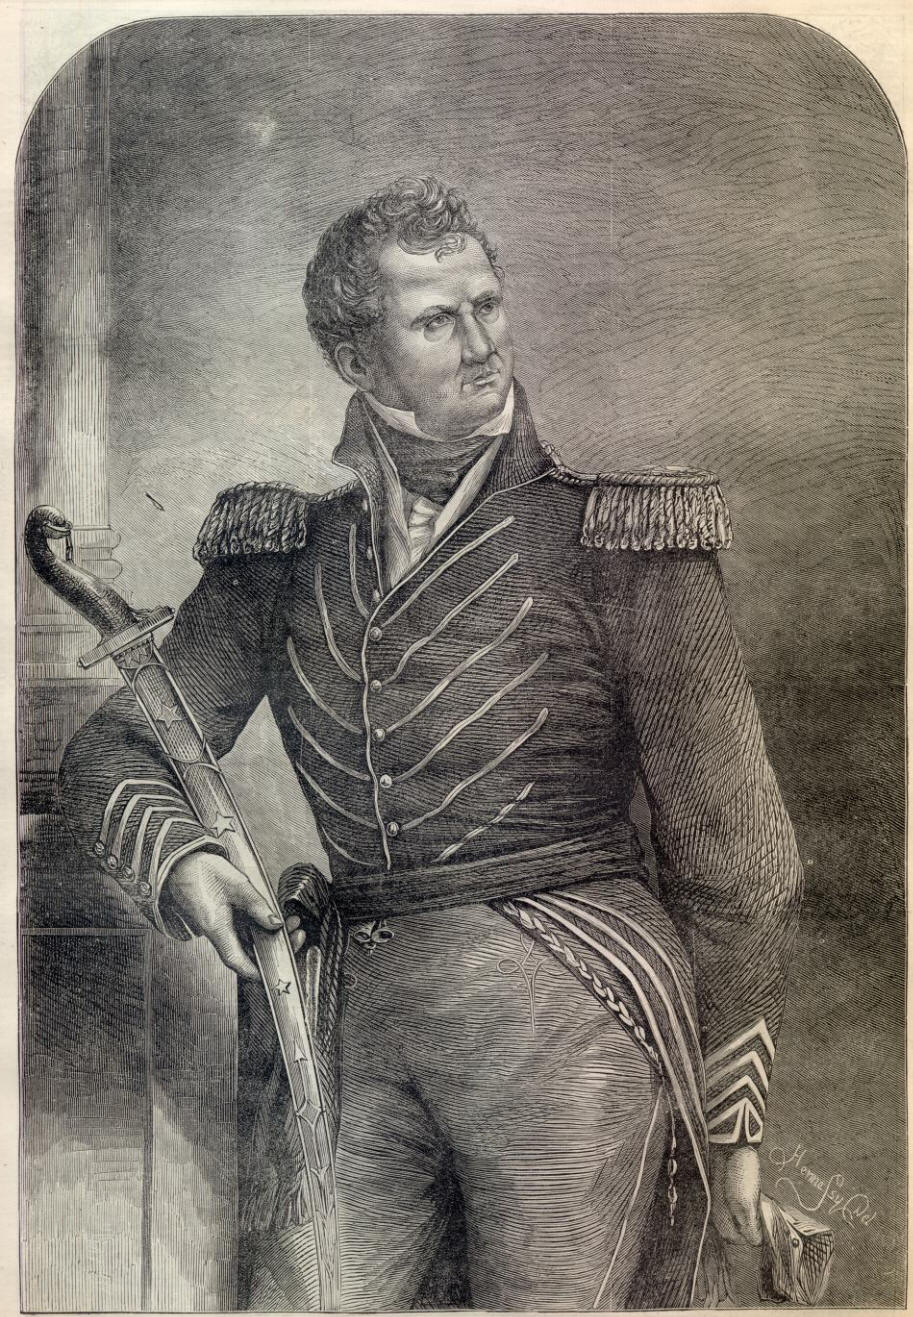 General Scott